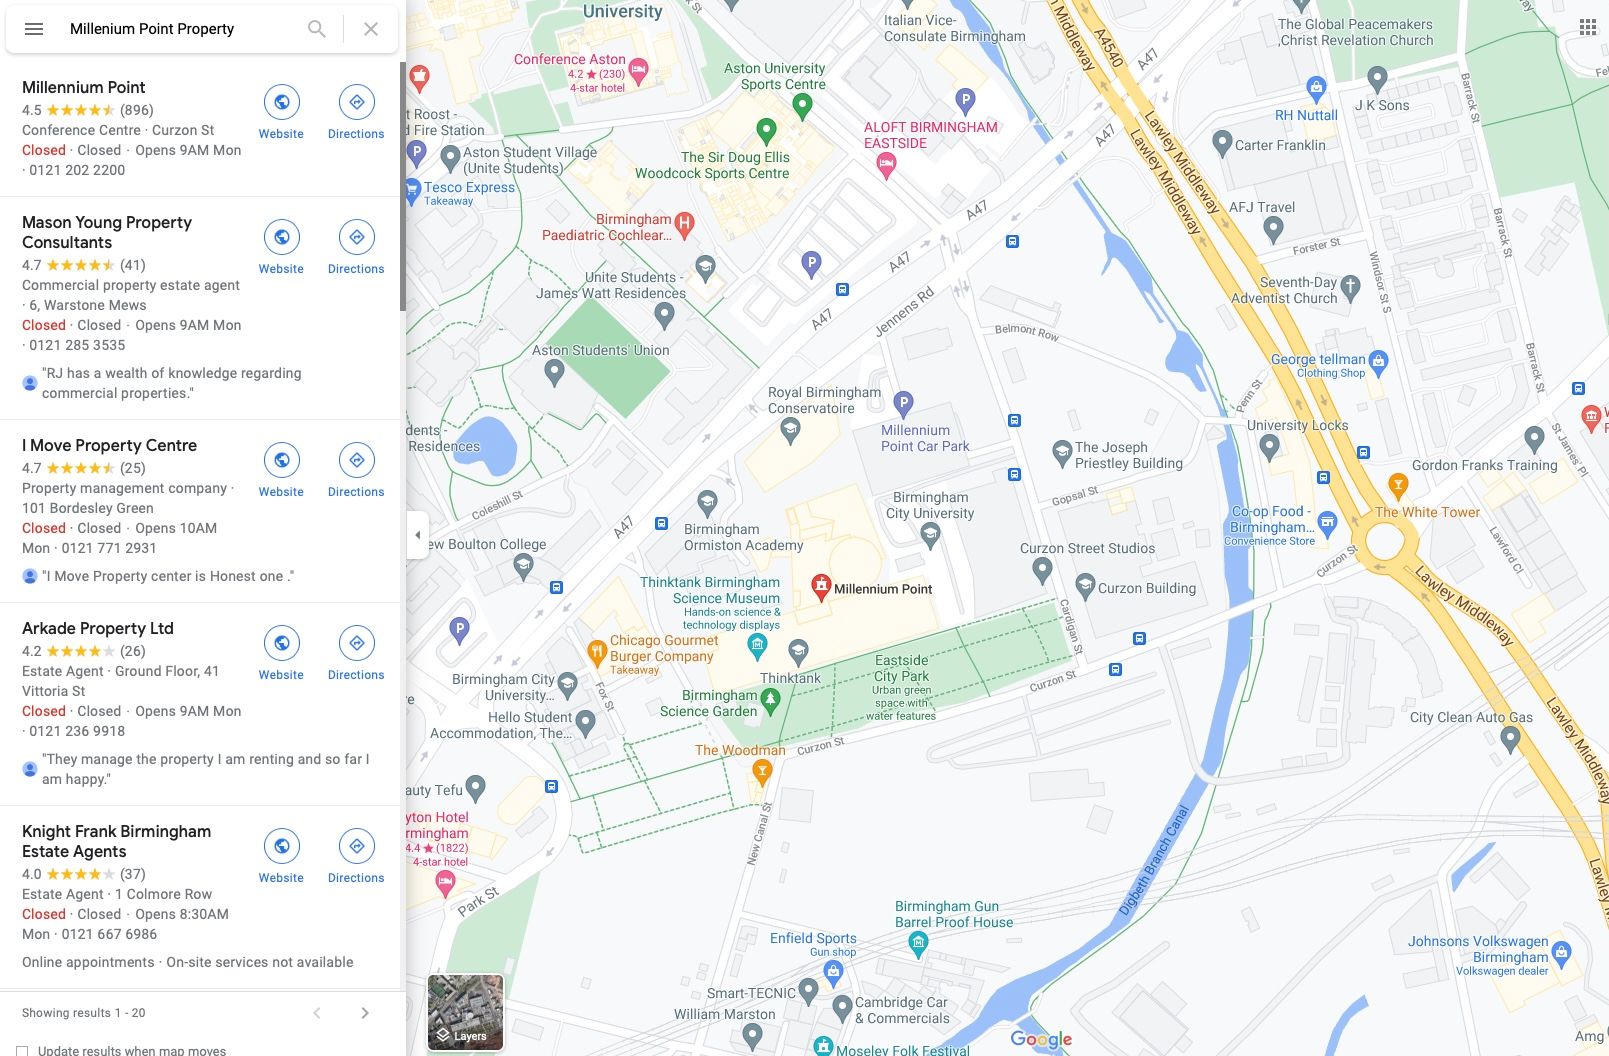 Birmingham City University (web only - Google Maps)